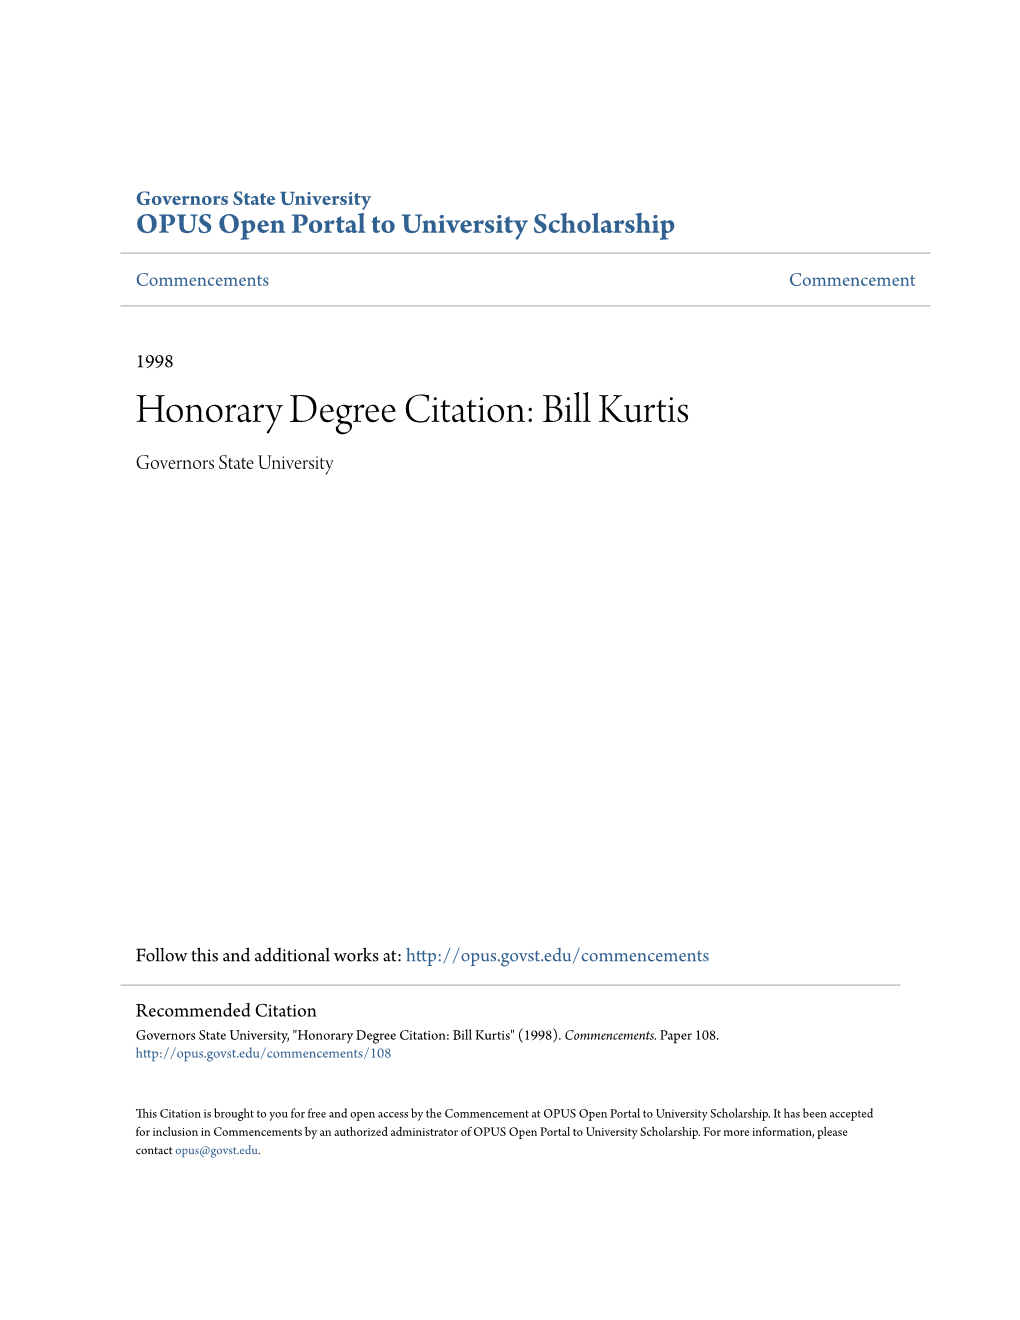 Honorary Degree Citation: Bill Kurtis Governors State University